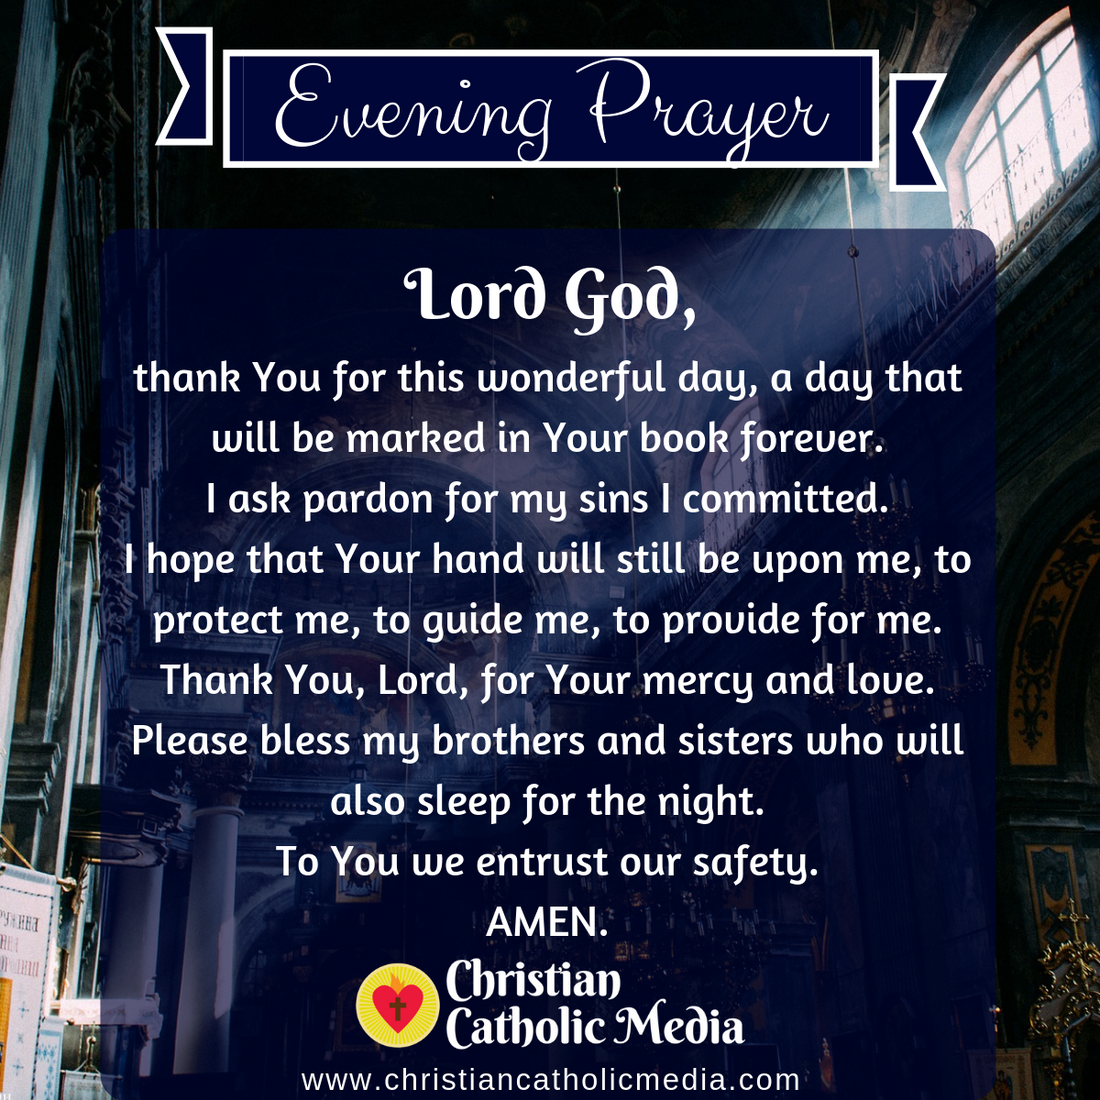 Evening Prayer Catholic Tuesday March 23, 2021